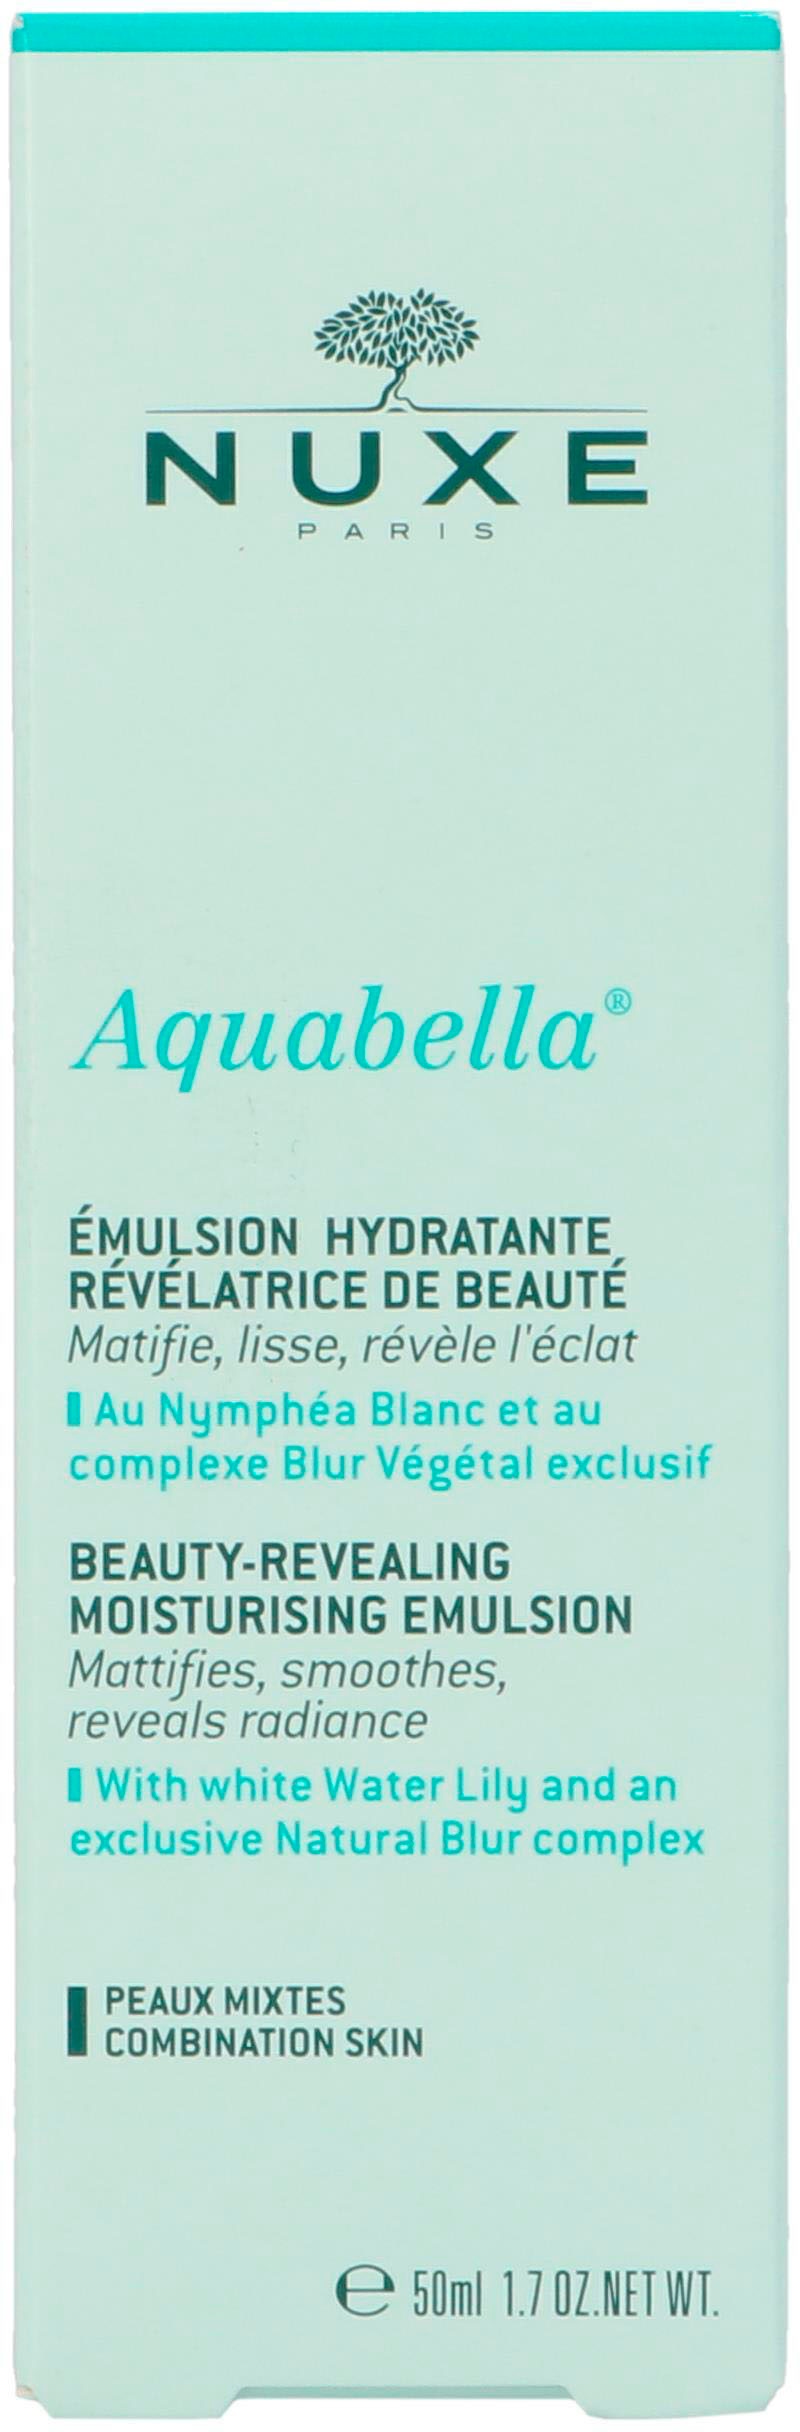 Revealing Emulsion« Nuxe »Aquabella Moisturizing Gesichtsserum Beauty